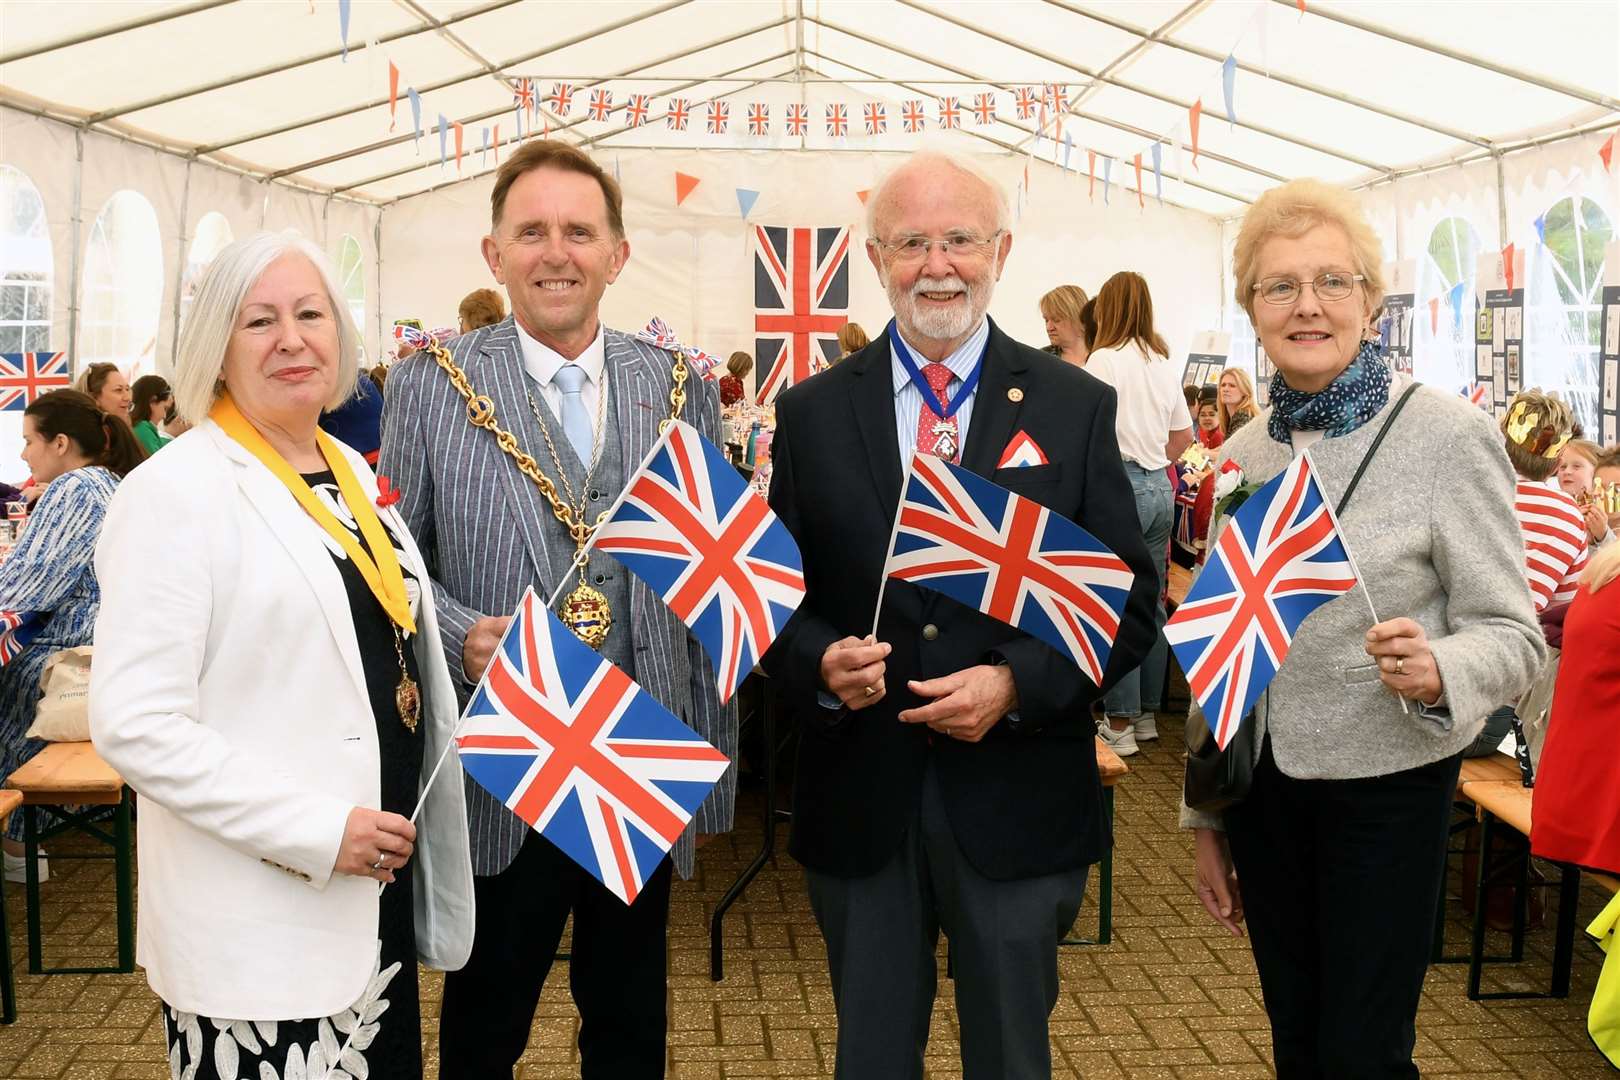 Maidstone mayor, Derek Mortimer, mayoress, Sally Mortimer and the Deputy Lieutenant of Kent, Bill Cockcroft joined the celebrations